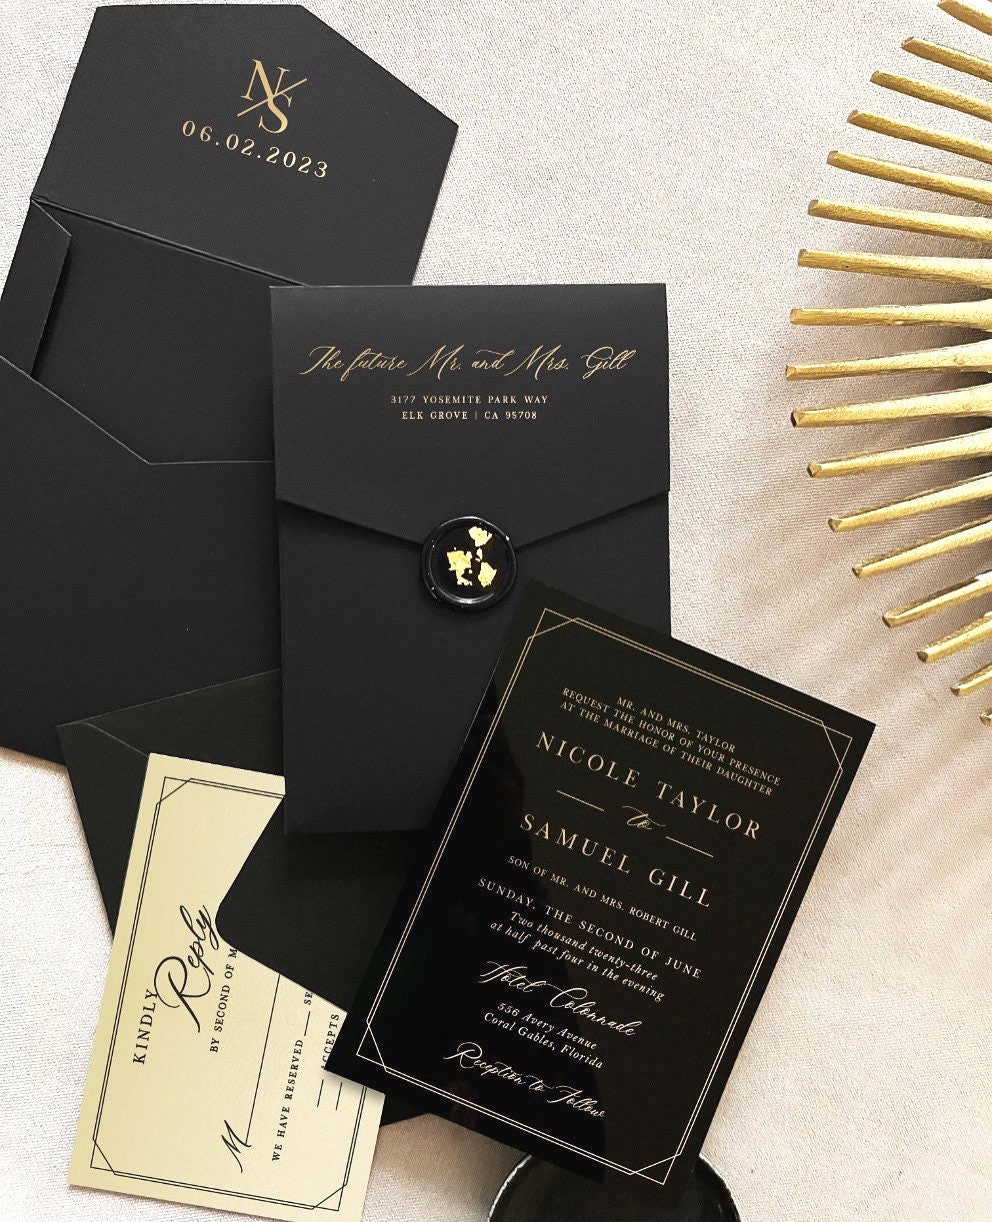 Customized Royal style Black Acrylic Wedding Invitation Card Acrylic  Invitations, Transparent Wedding Invitations ACL003